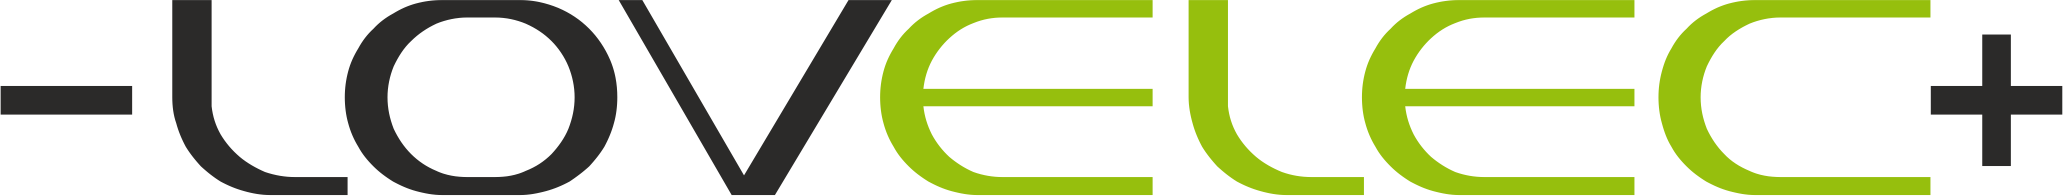 Lovelec logo